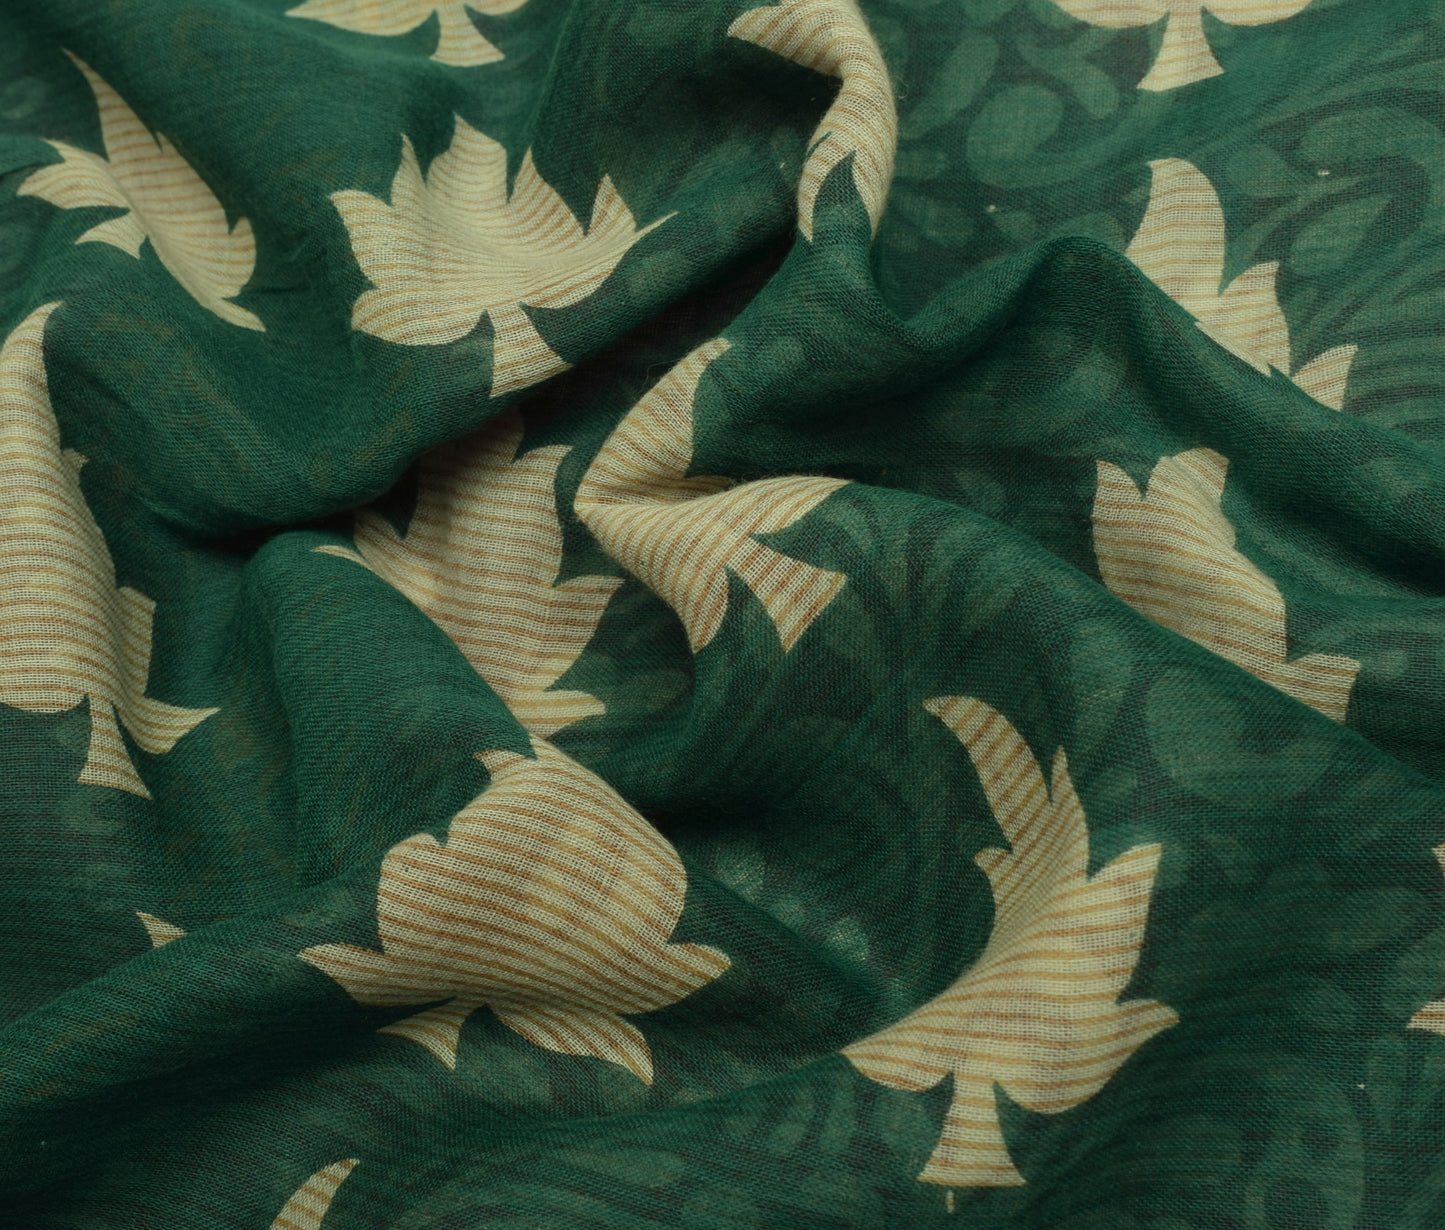 Sushila Vintage Multi-Color Saree 100% Pure Cotton Printed Floral Craft Fabric